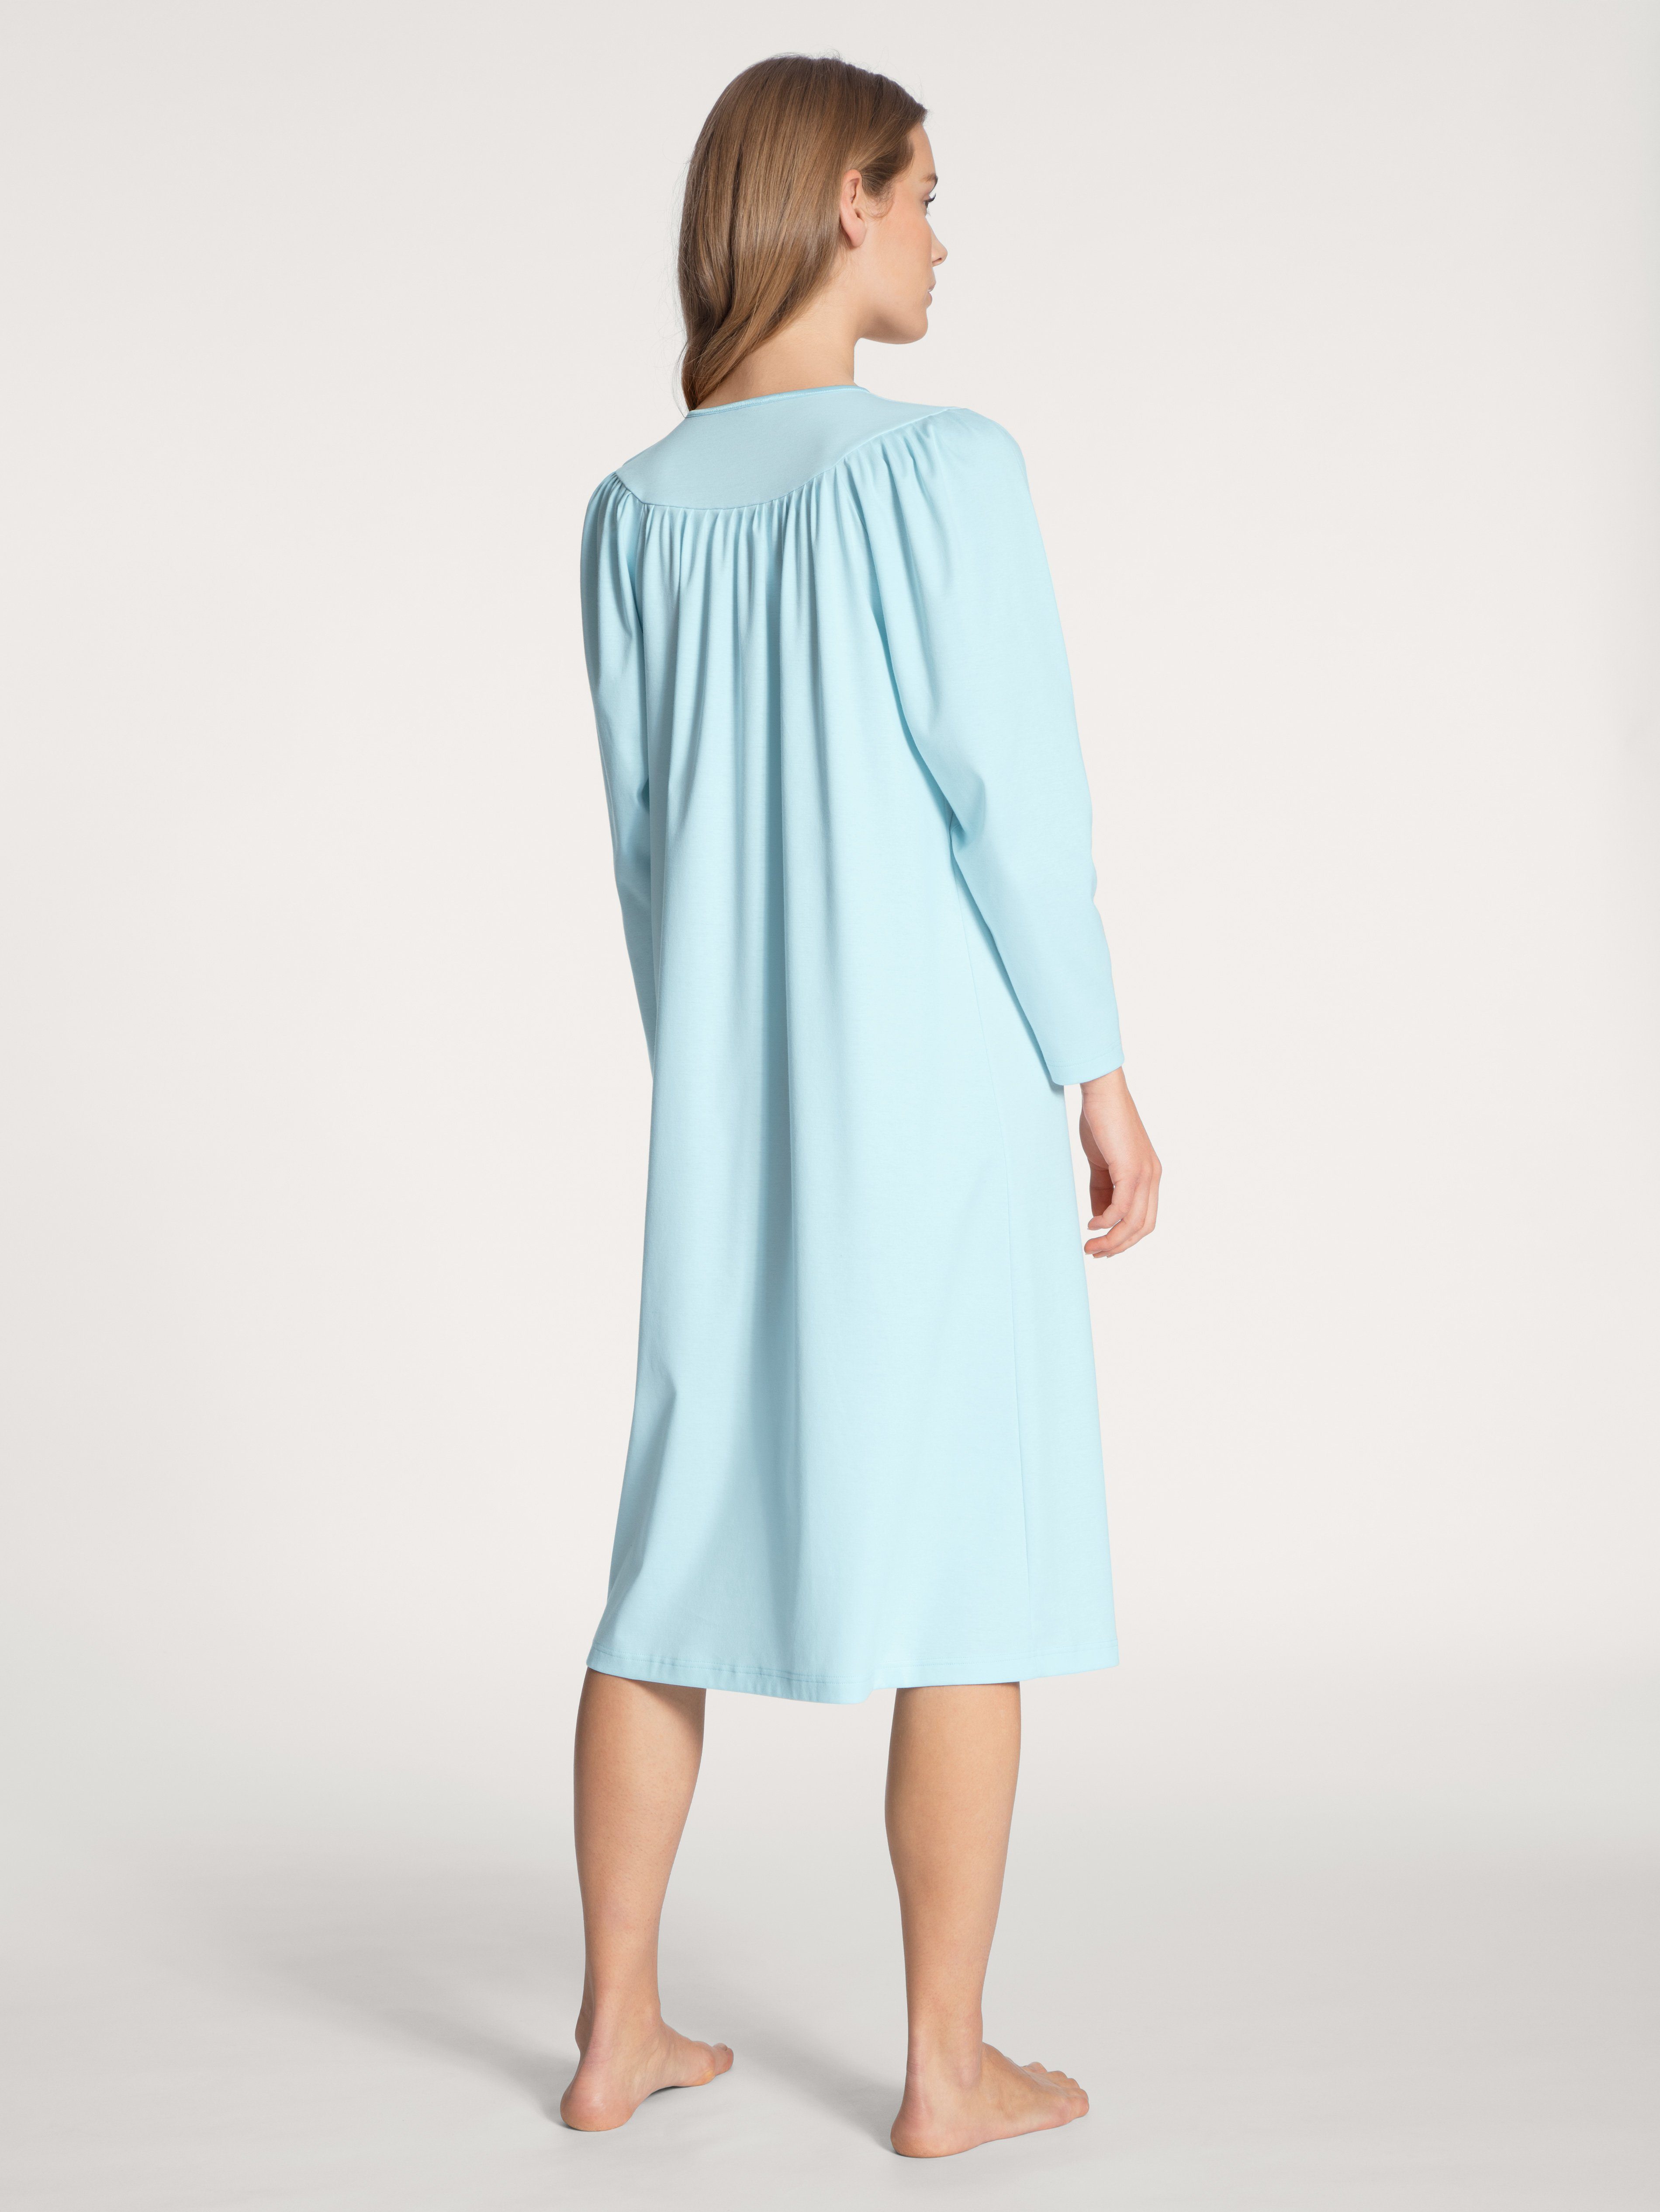 Fit, Nachthemd Soft ca. cm 110 hellblau CALIDA Cotton Raglanschnitt Schlafhemd lang, Comfort